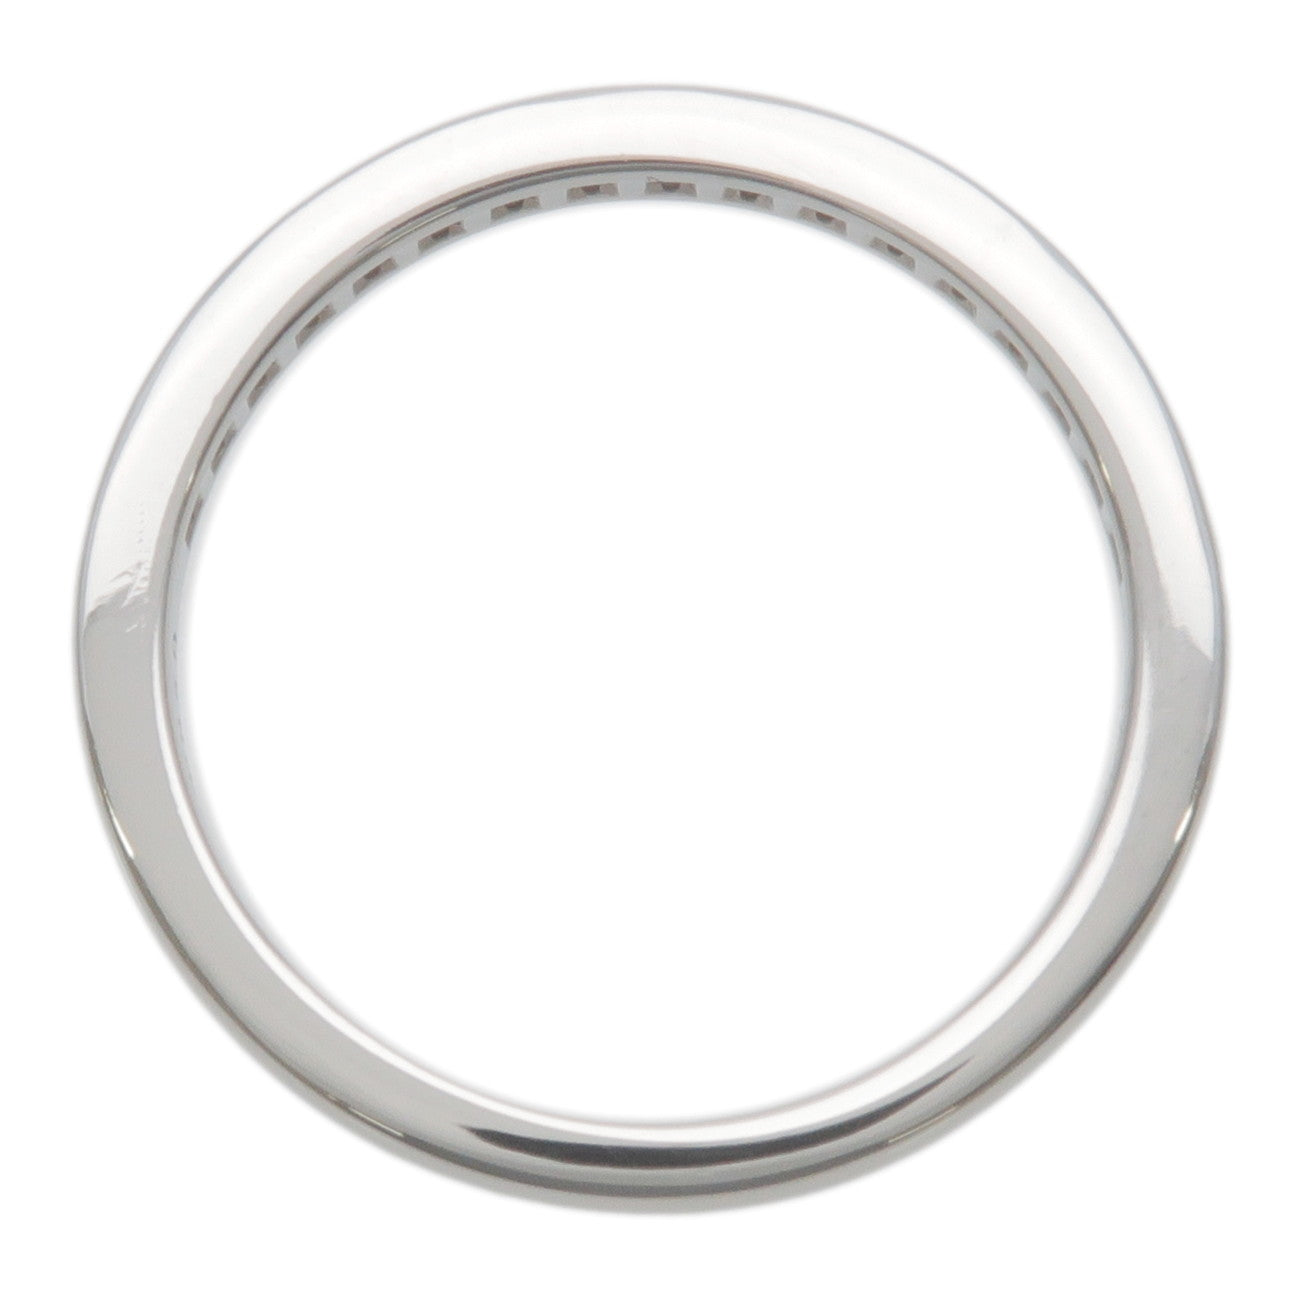 Tiffany&Co. Half Circle Channel Setting Diamond Ring PT950 US5.5